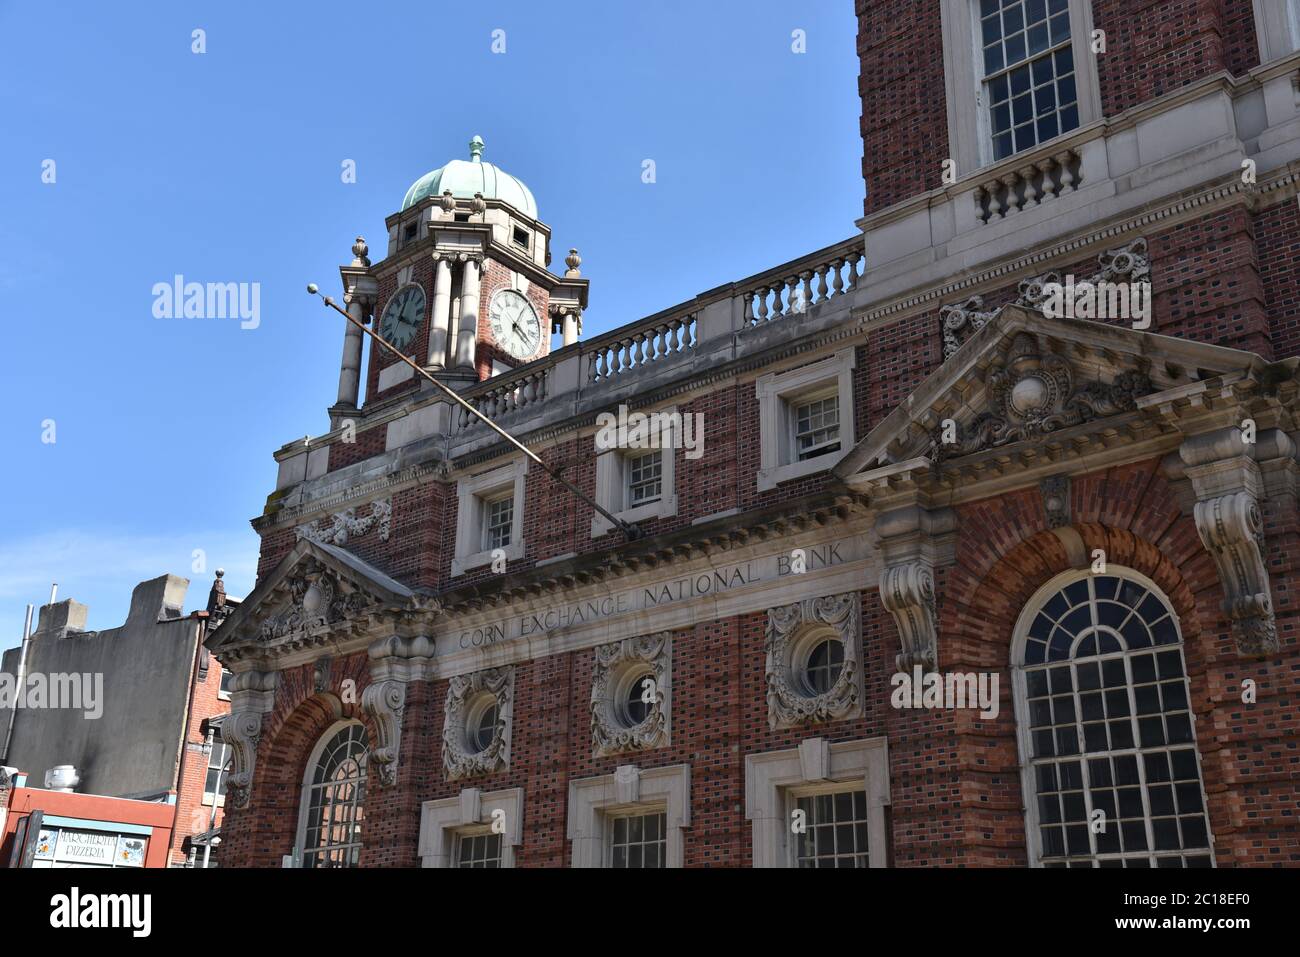 Philadelphia, PA/USA - June 26, 2019: The historic Corn Exchange National Bank Building in Old Towne Philadelphia Stock Photo